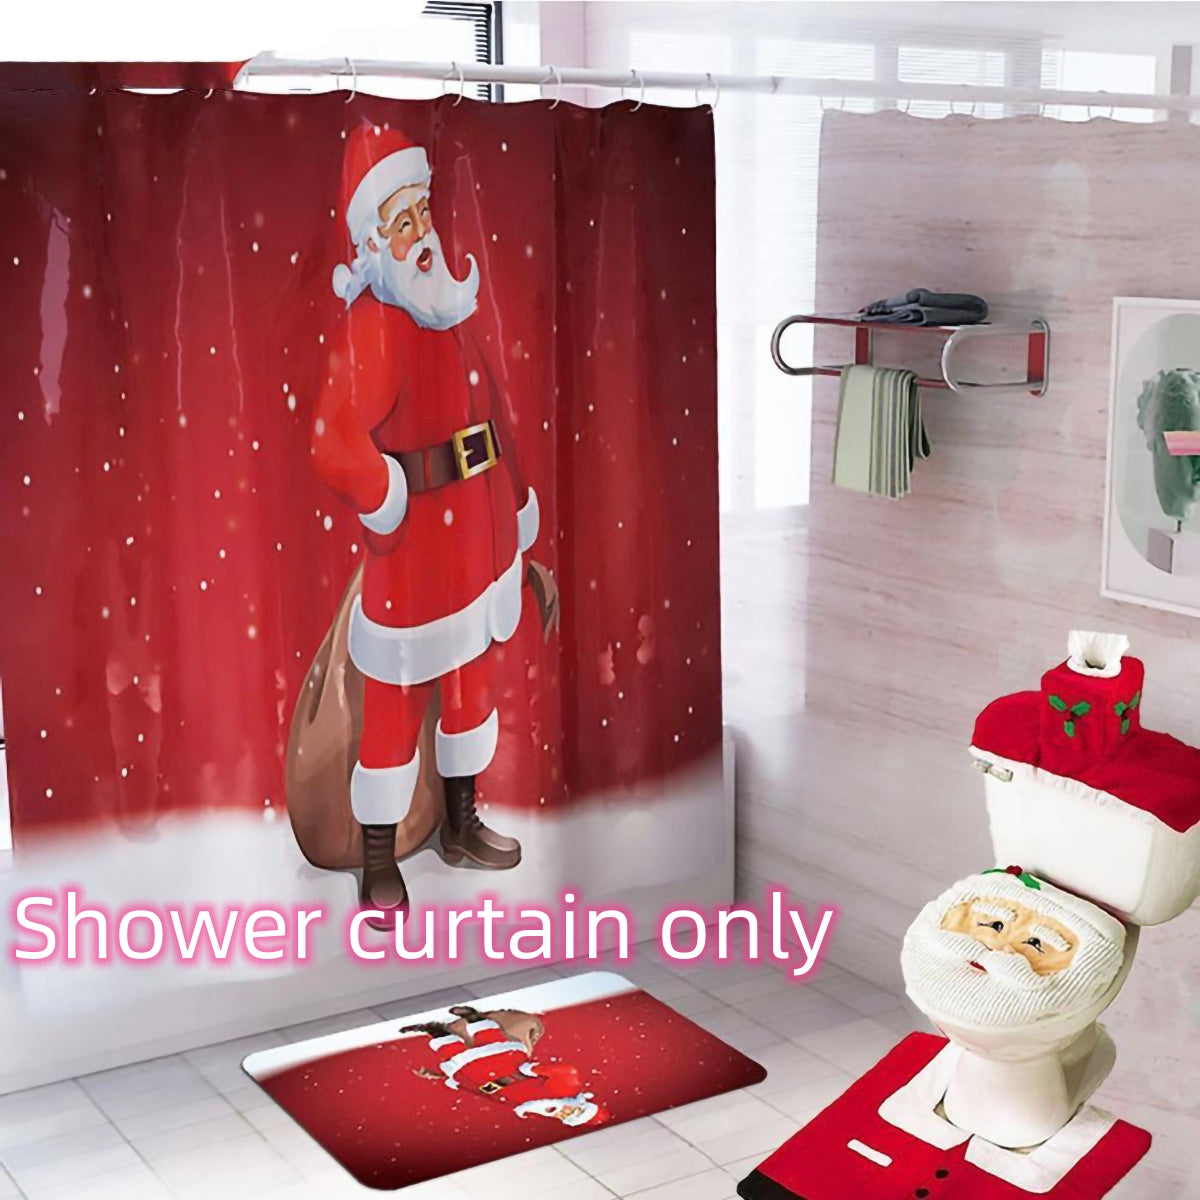 Merry Christmas Bathroom Curtain Santa Claus Toilet Seat Christmas Decorations